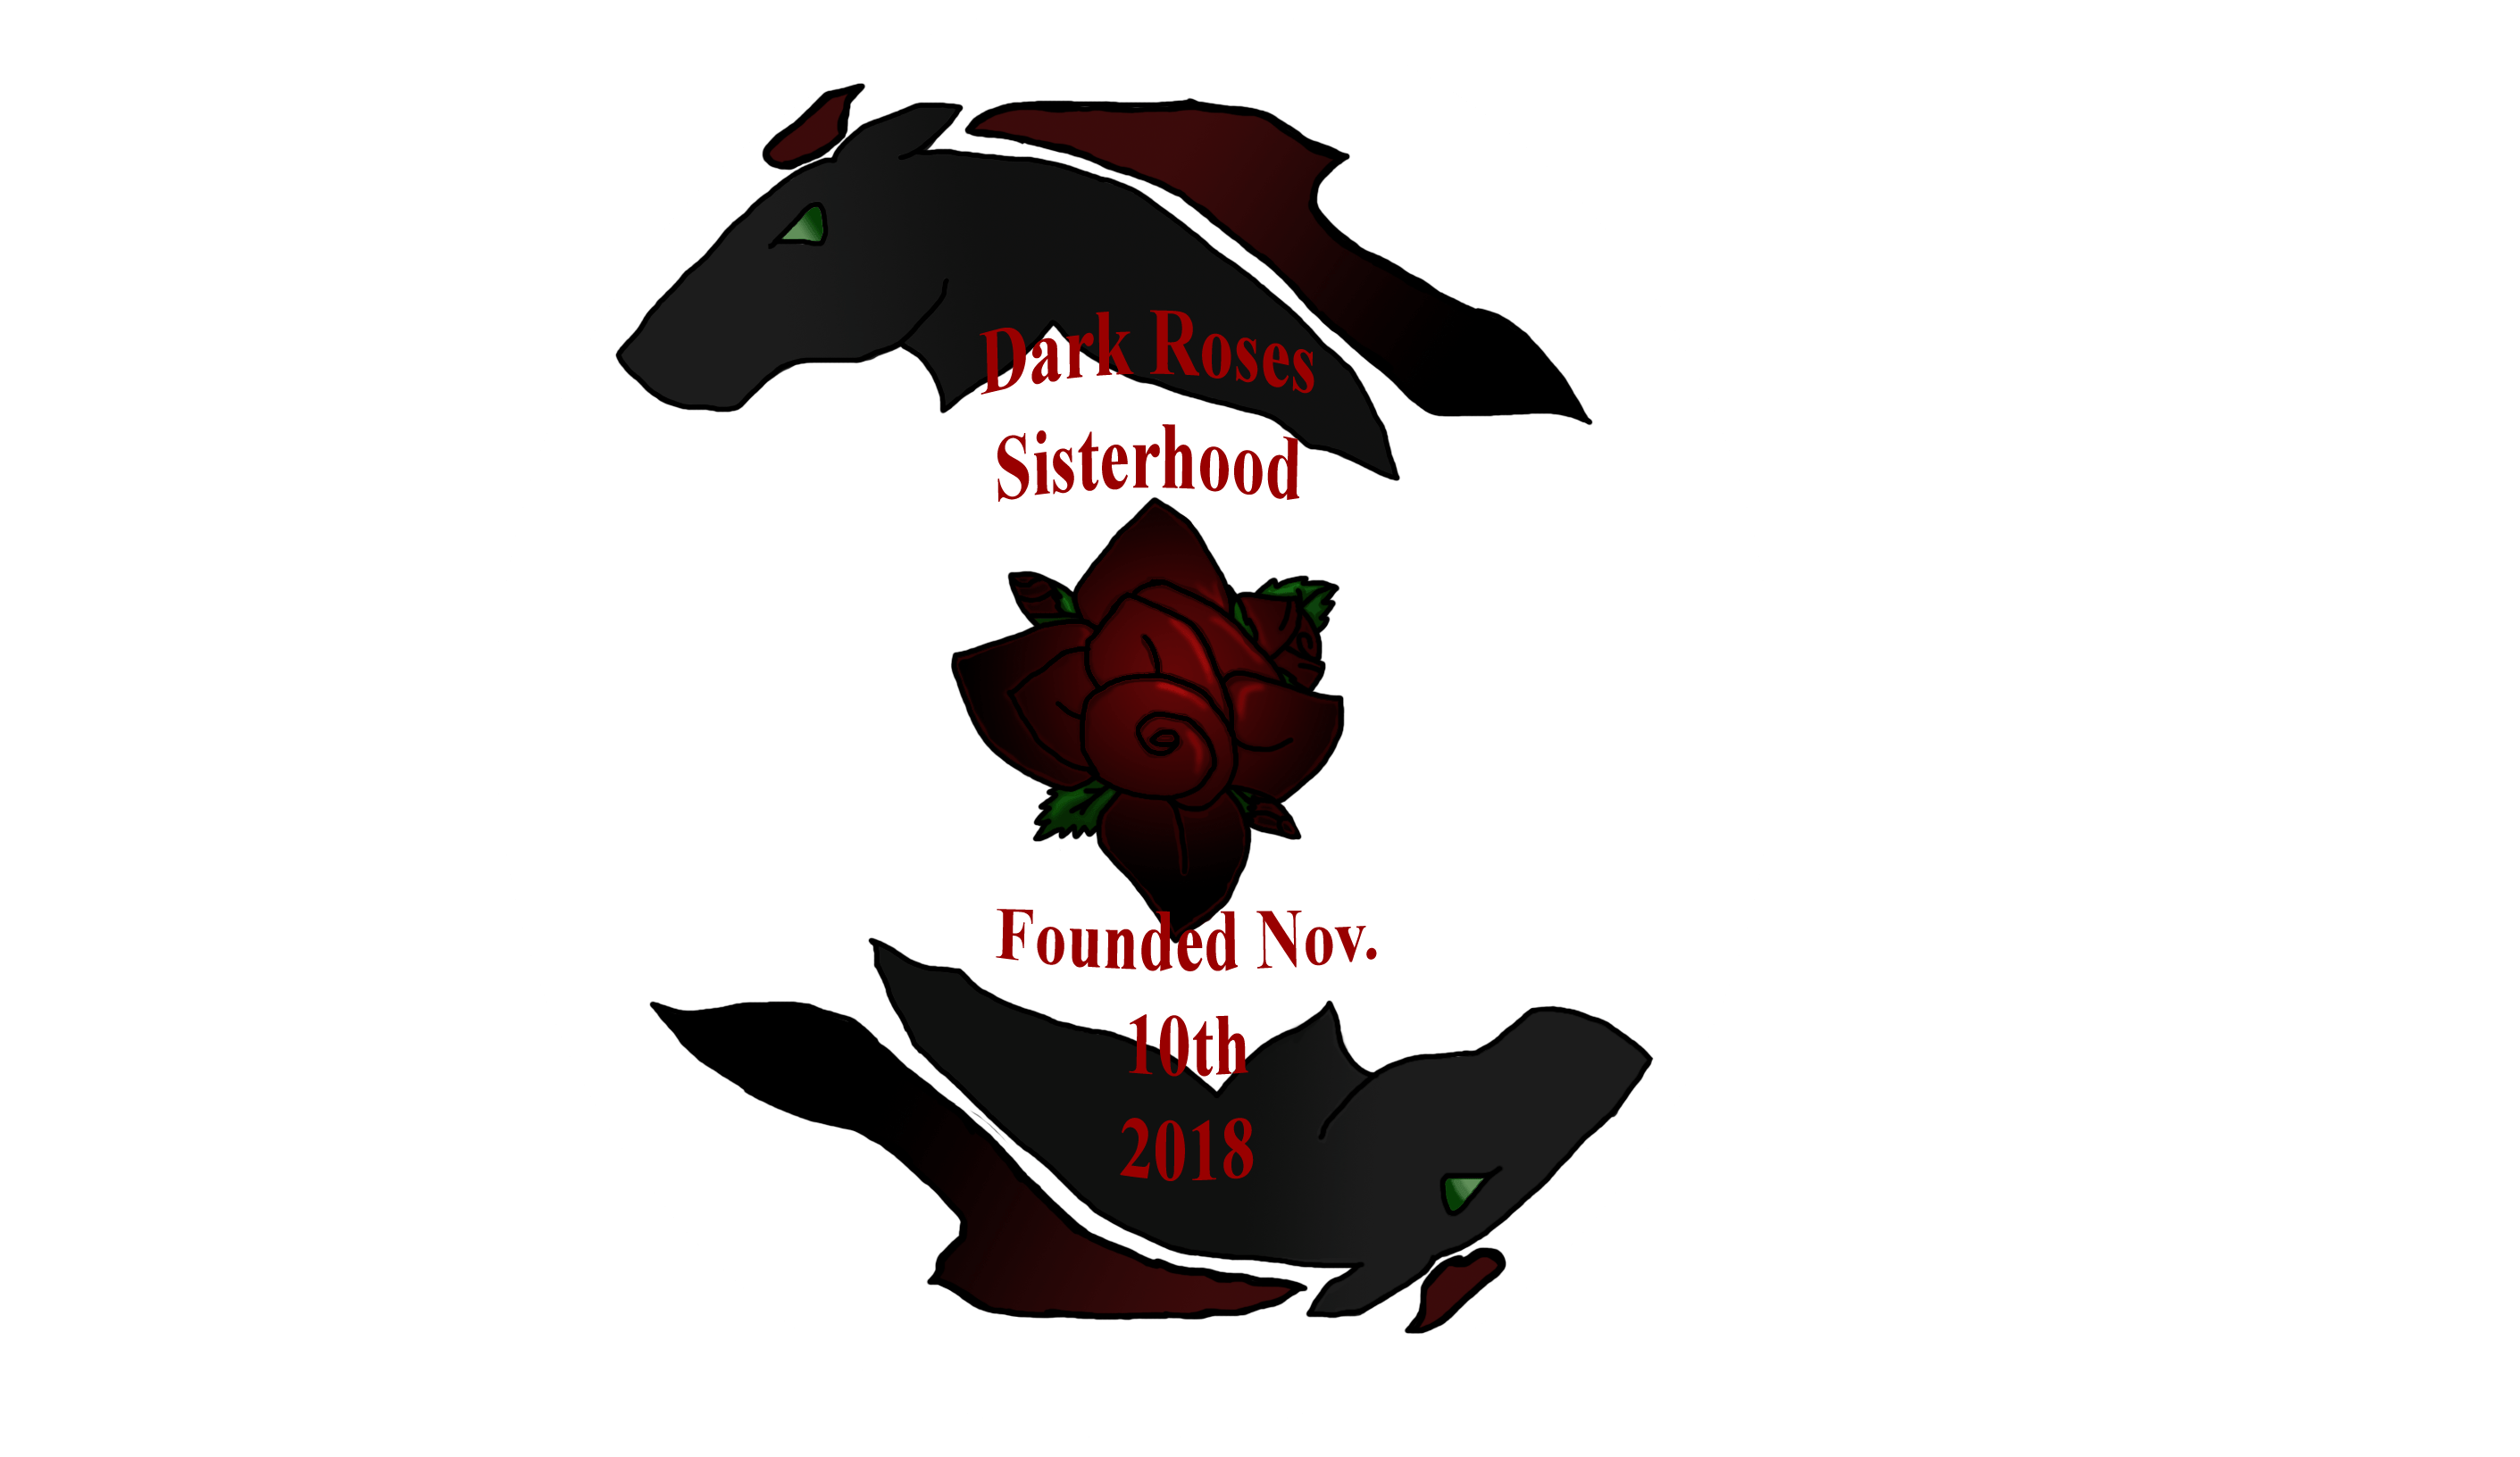 Sisterhood Logo - Dark Roses Sisterhood Logo Colored By Rose Angle